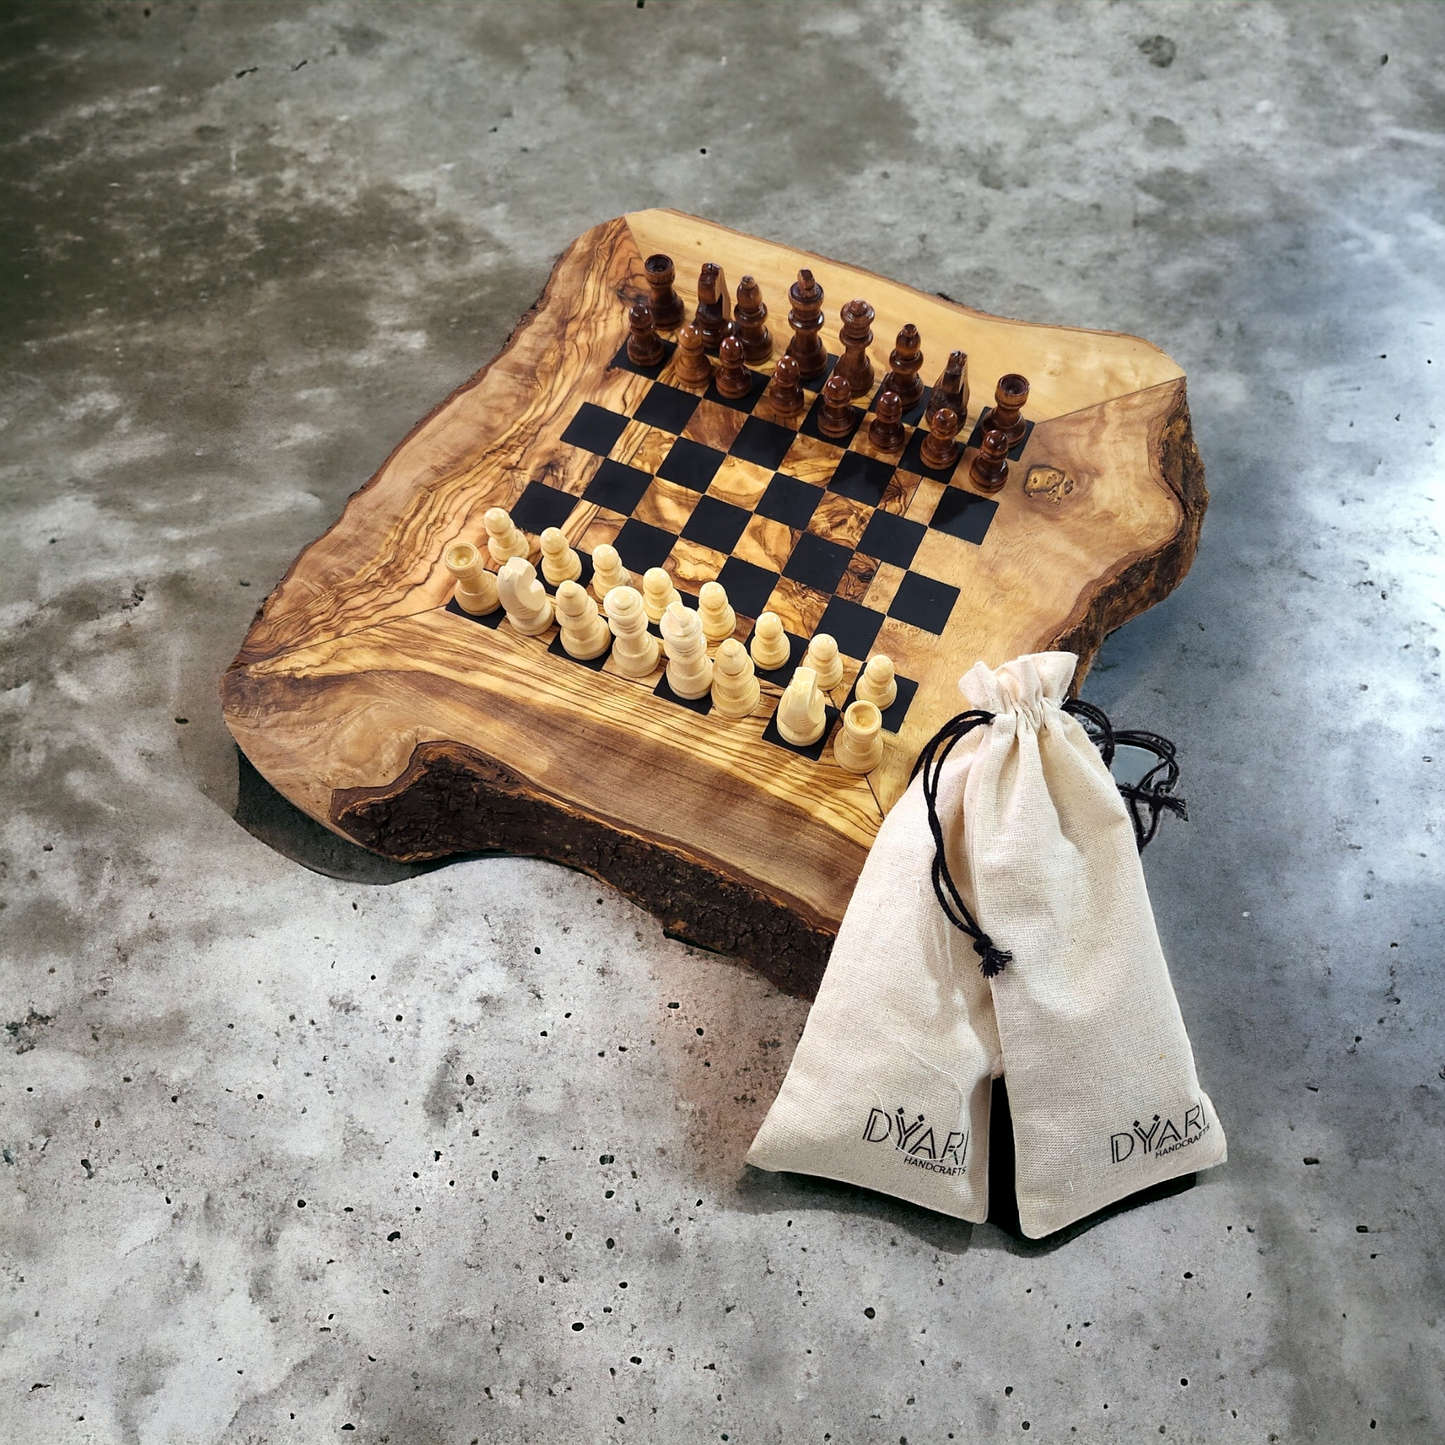 Live Edge Olive Wood & Epoxy Chess Board - 32 pieces - Black